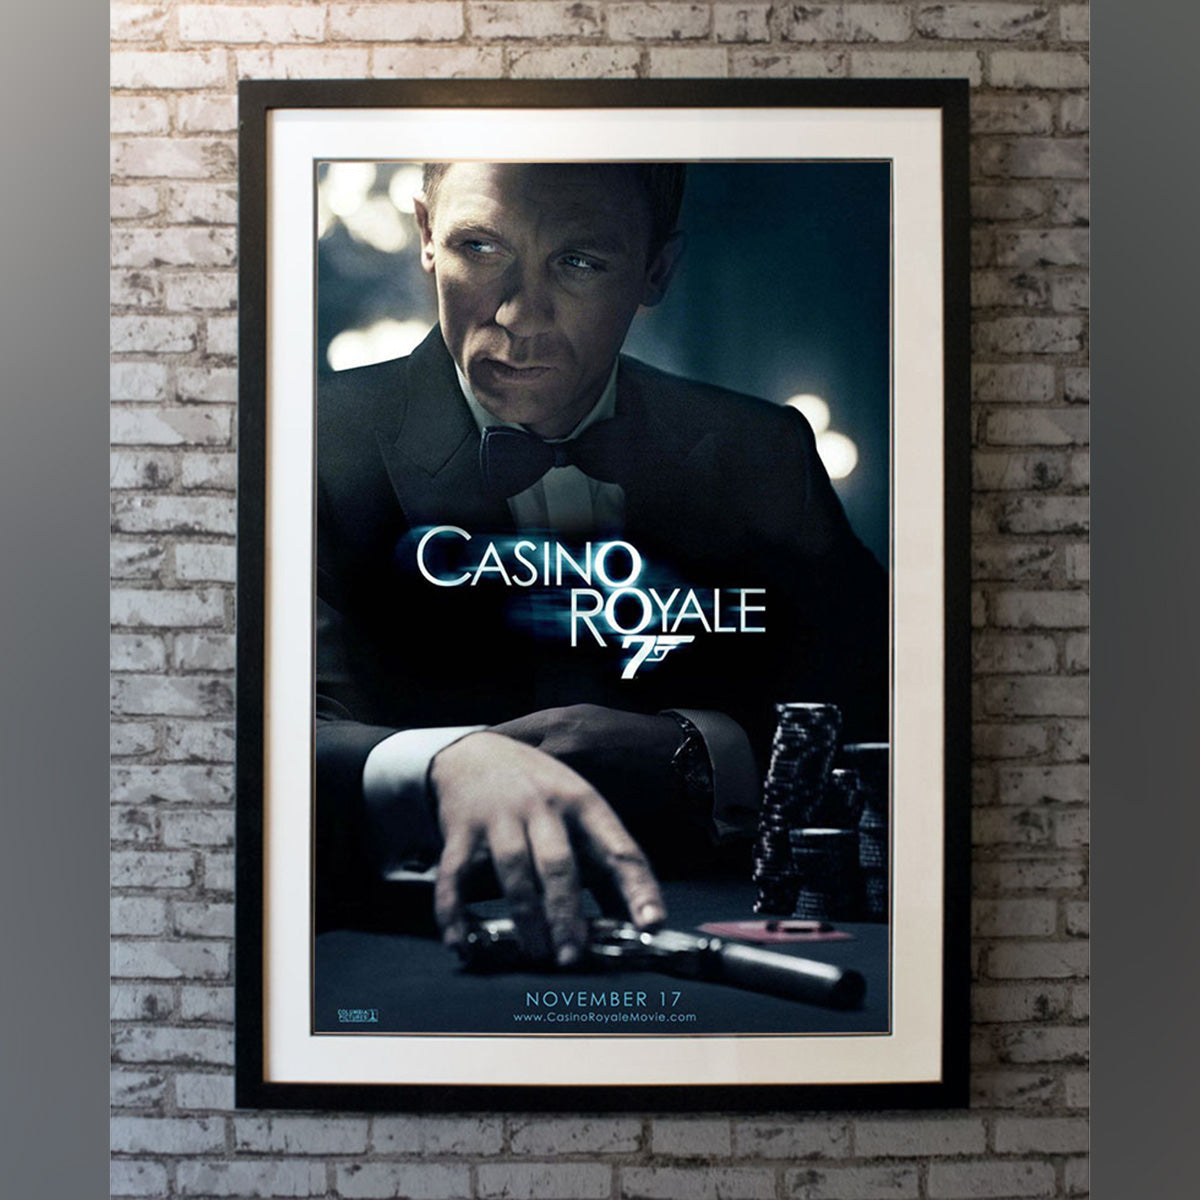 Original Movie Poster of Casino Royale (2006)